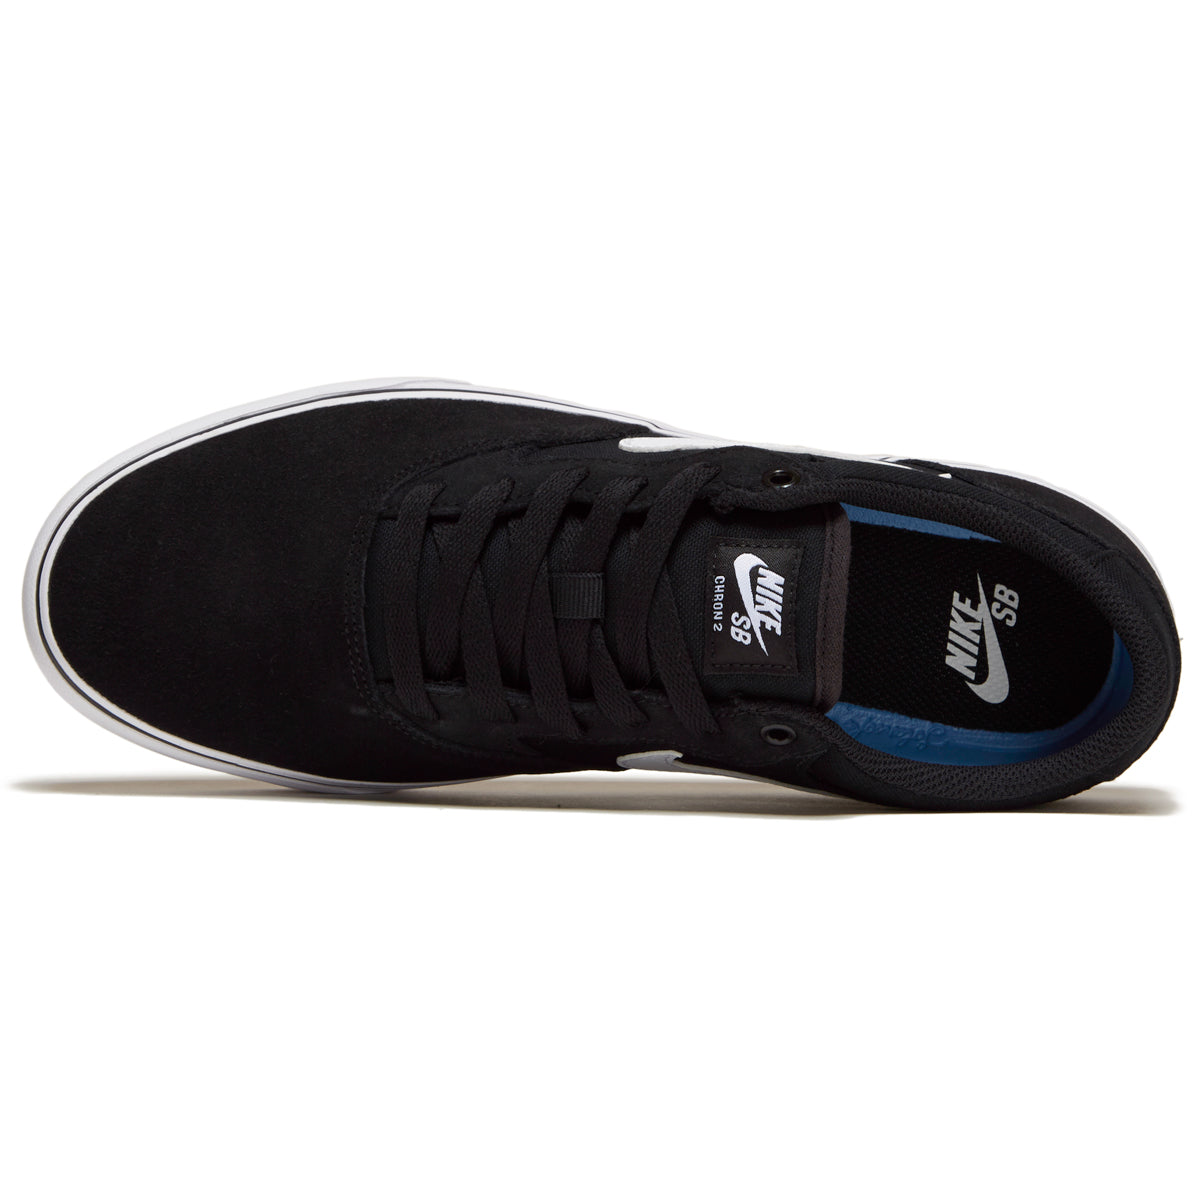 Nike SB Chron 2 Shoes - Black/White/Black image 3